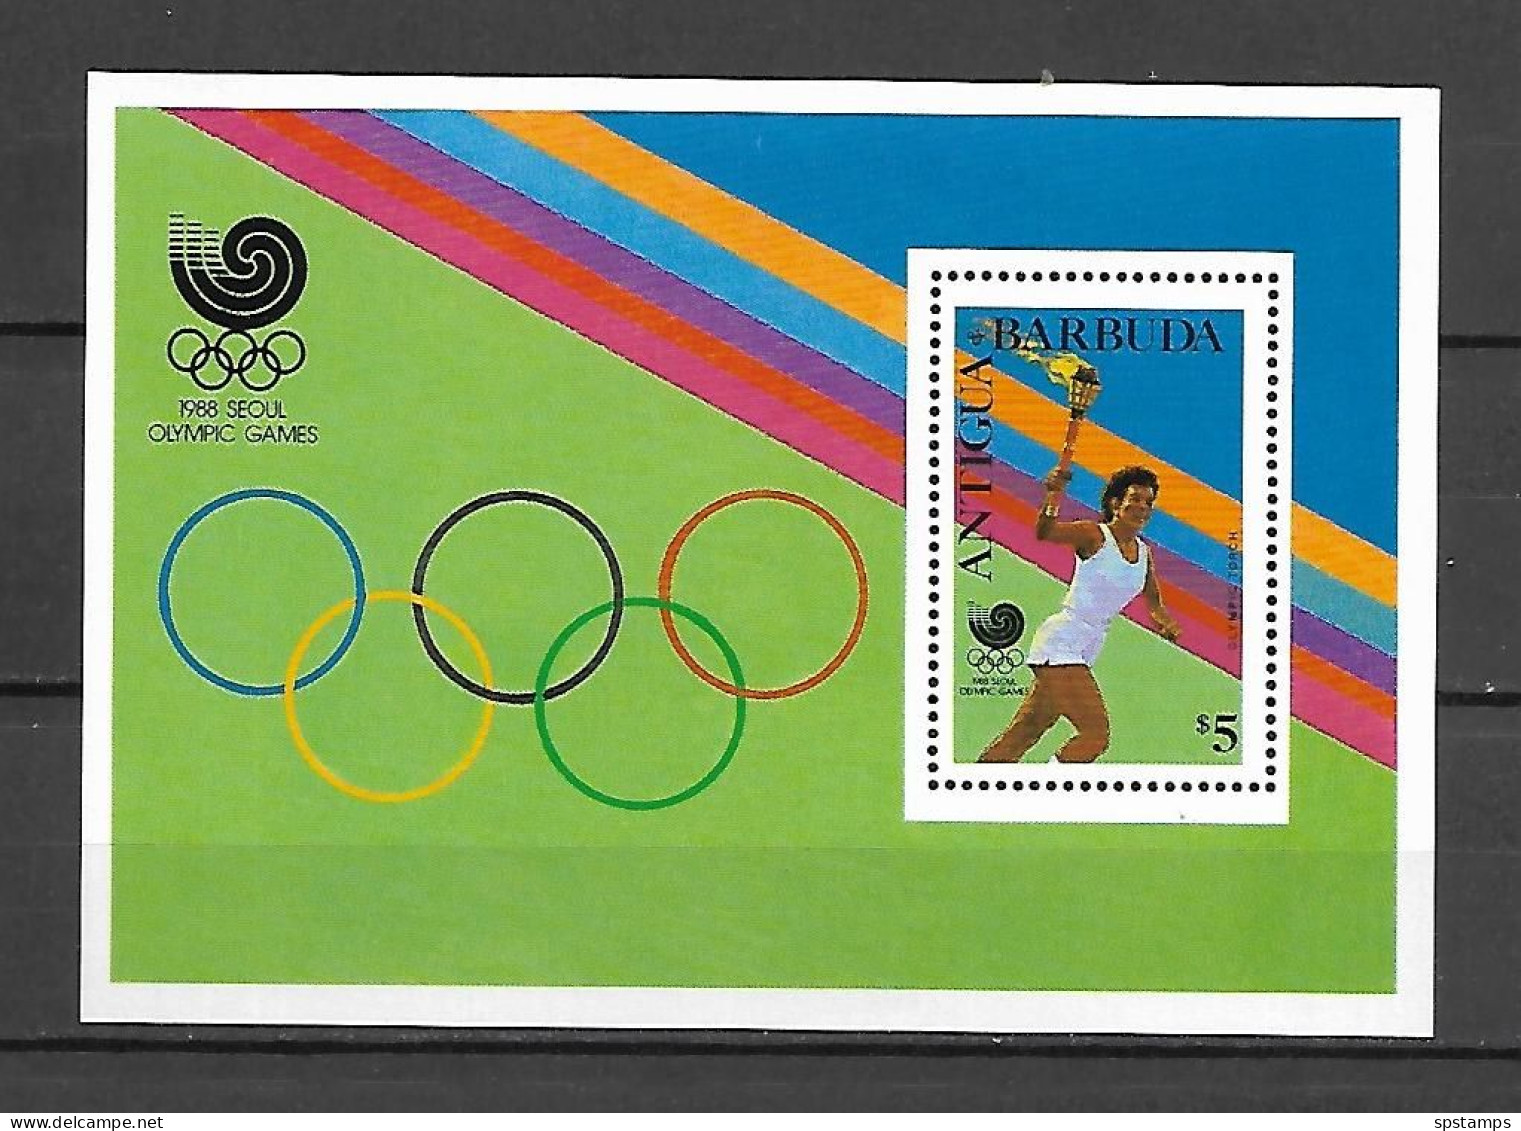 Antigua & Barbuda 1988 Olympic Games SEOUL MS MNH - Summer 1988: Seoul